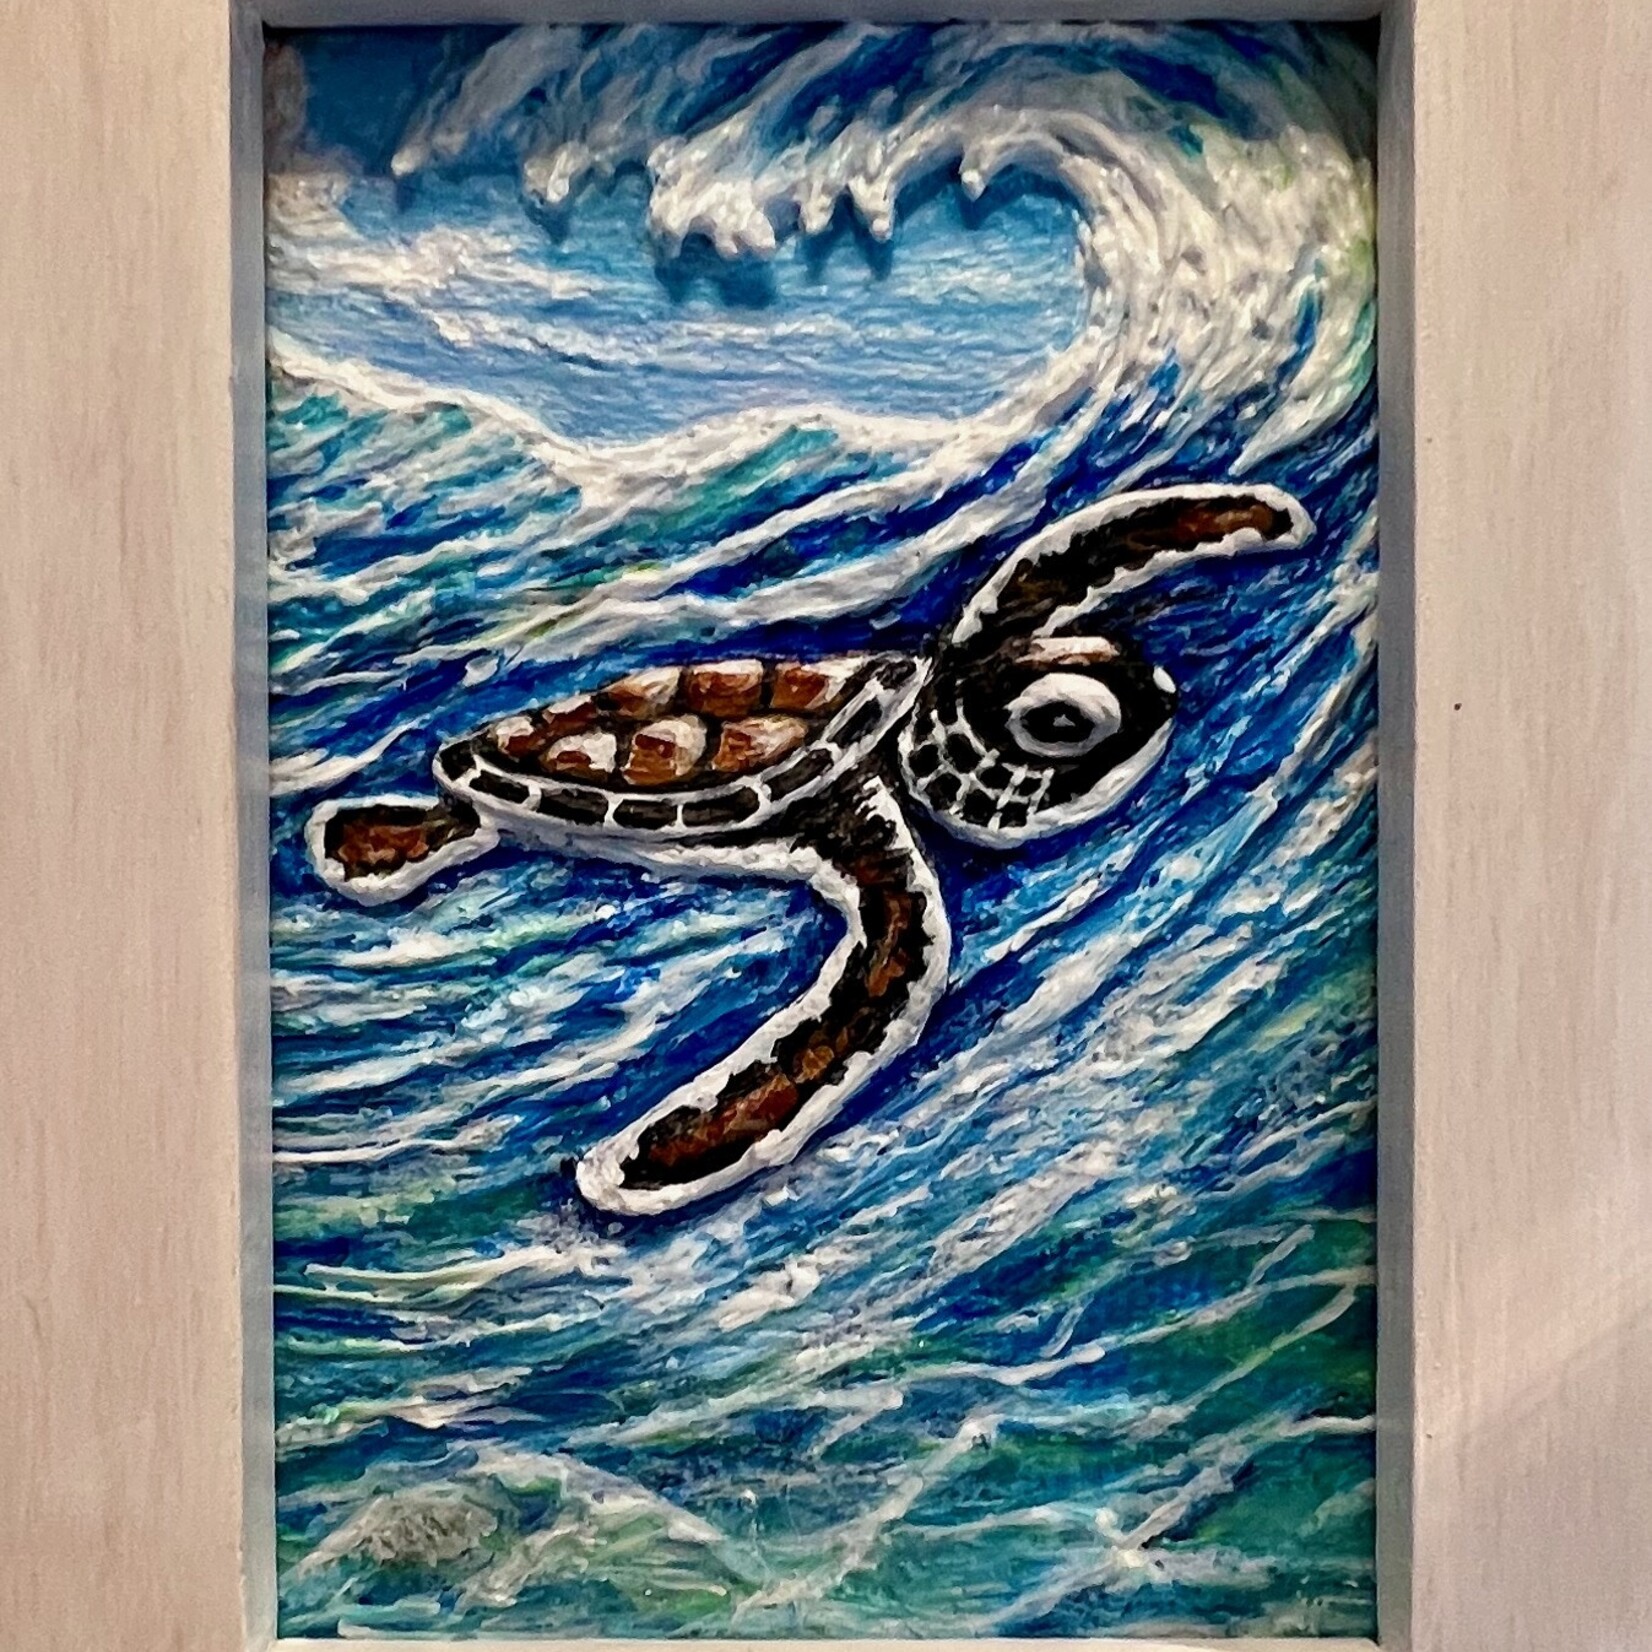 Carol Merritt "Just Keep Swimming" turtle in wave, @4x5" framed, CARM